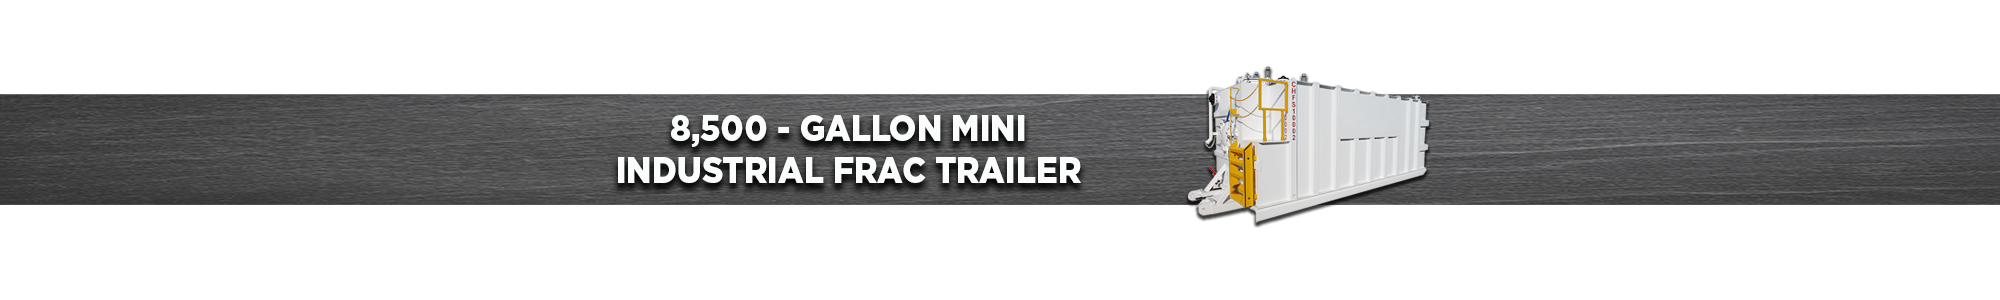 8,500-Gallon Mini Industrial Frac Trailer